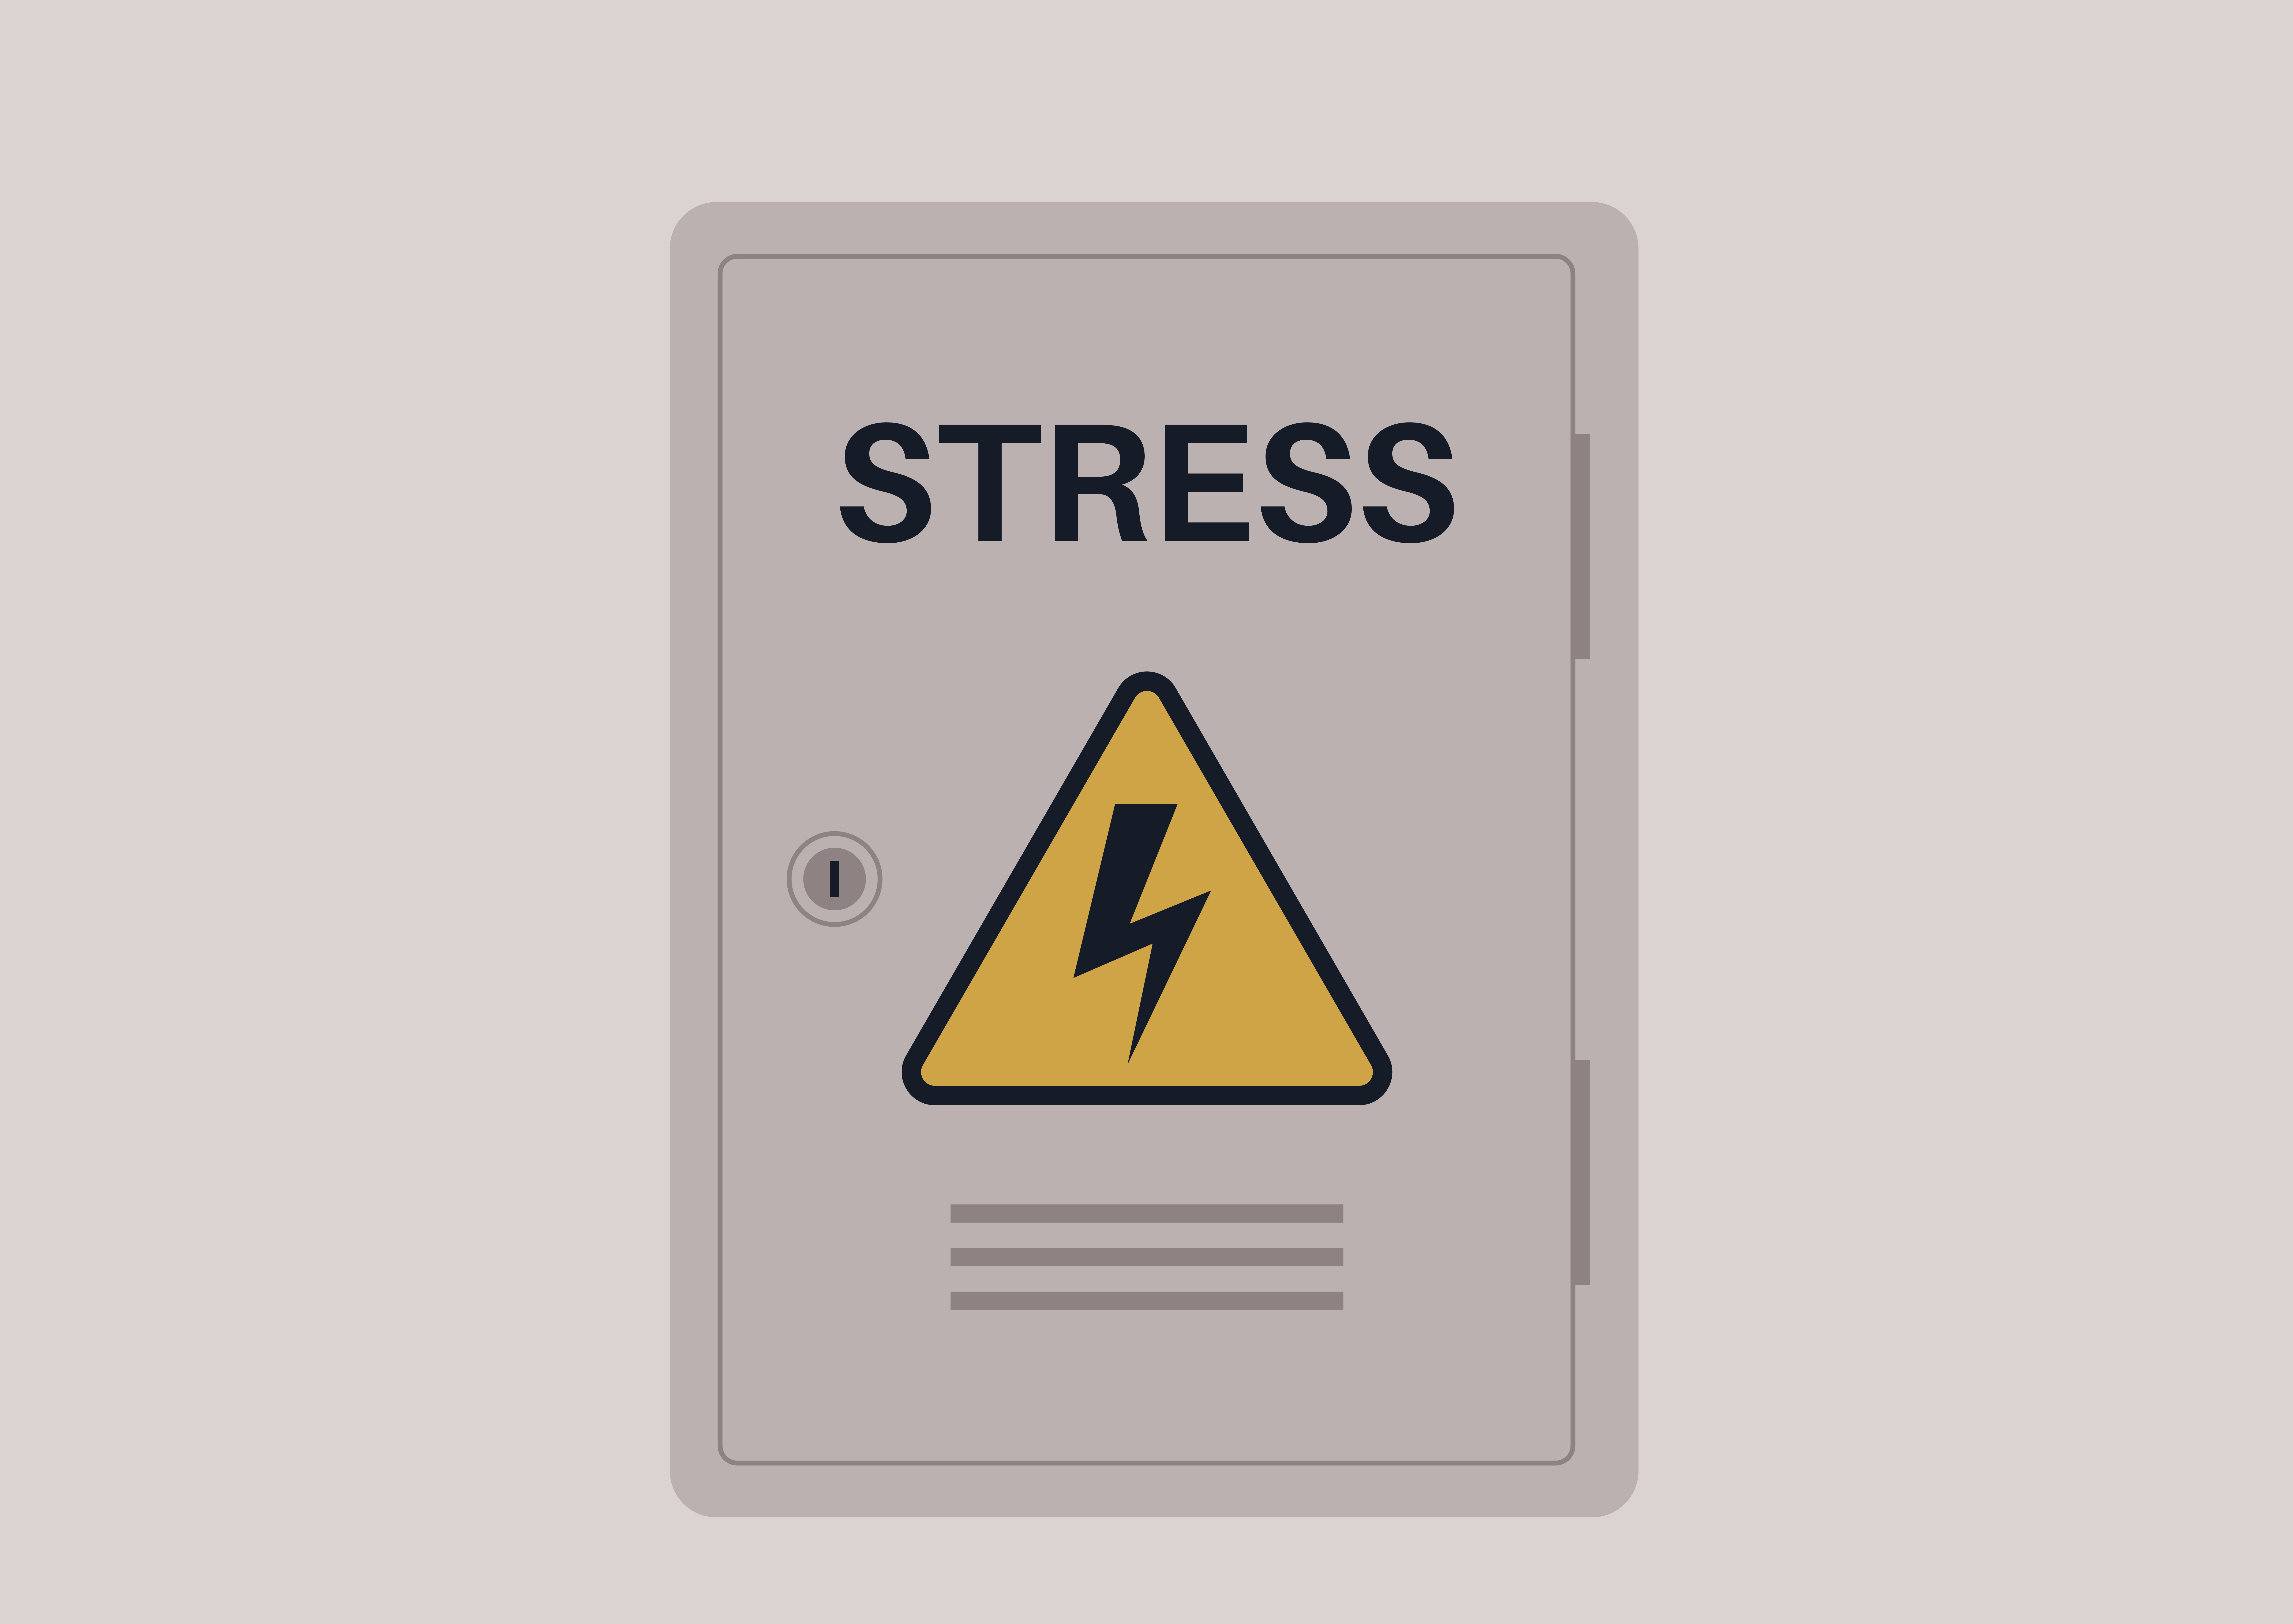 Image for Stress Management